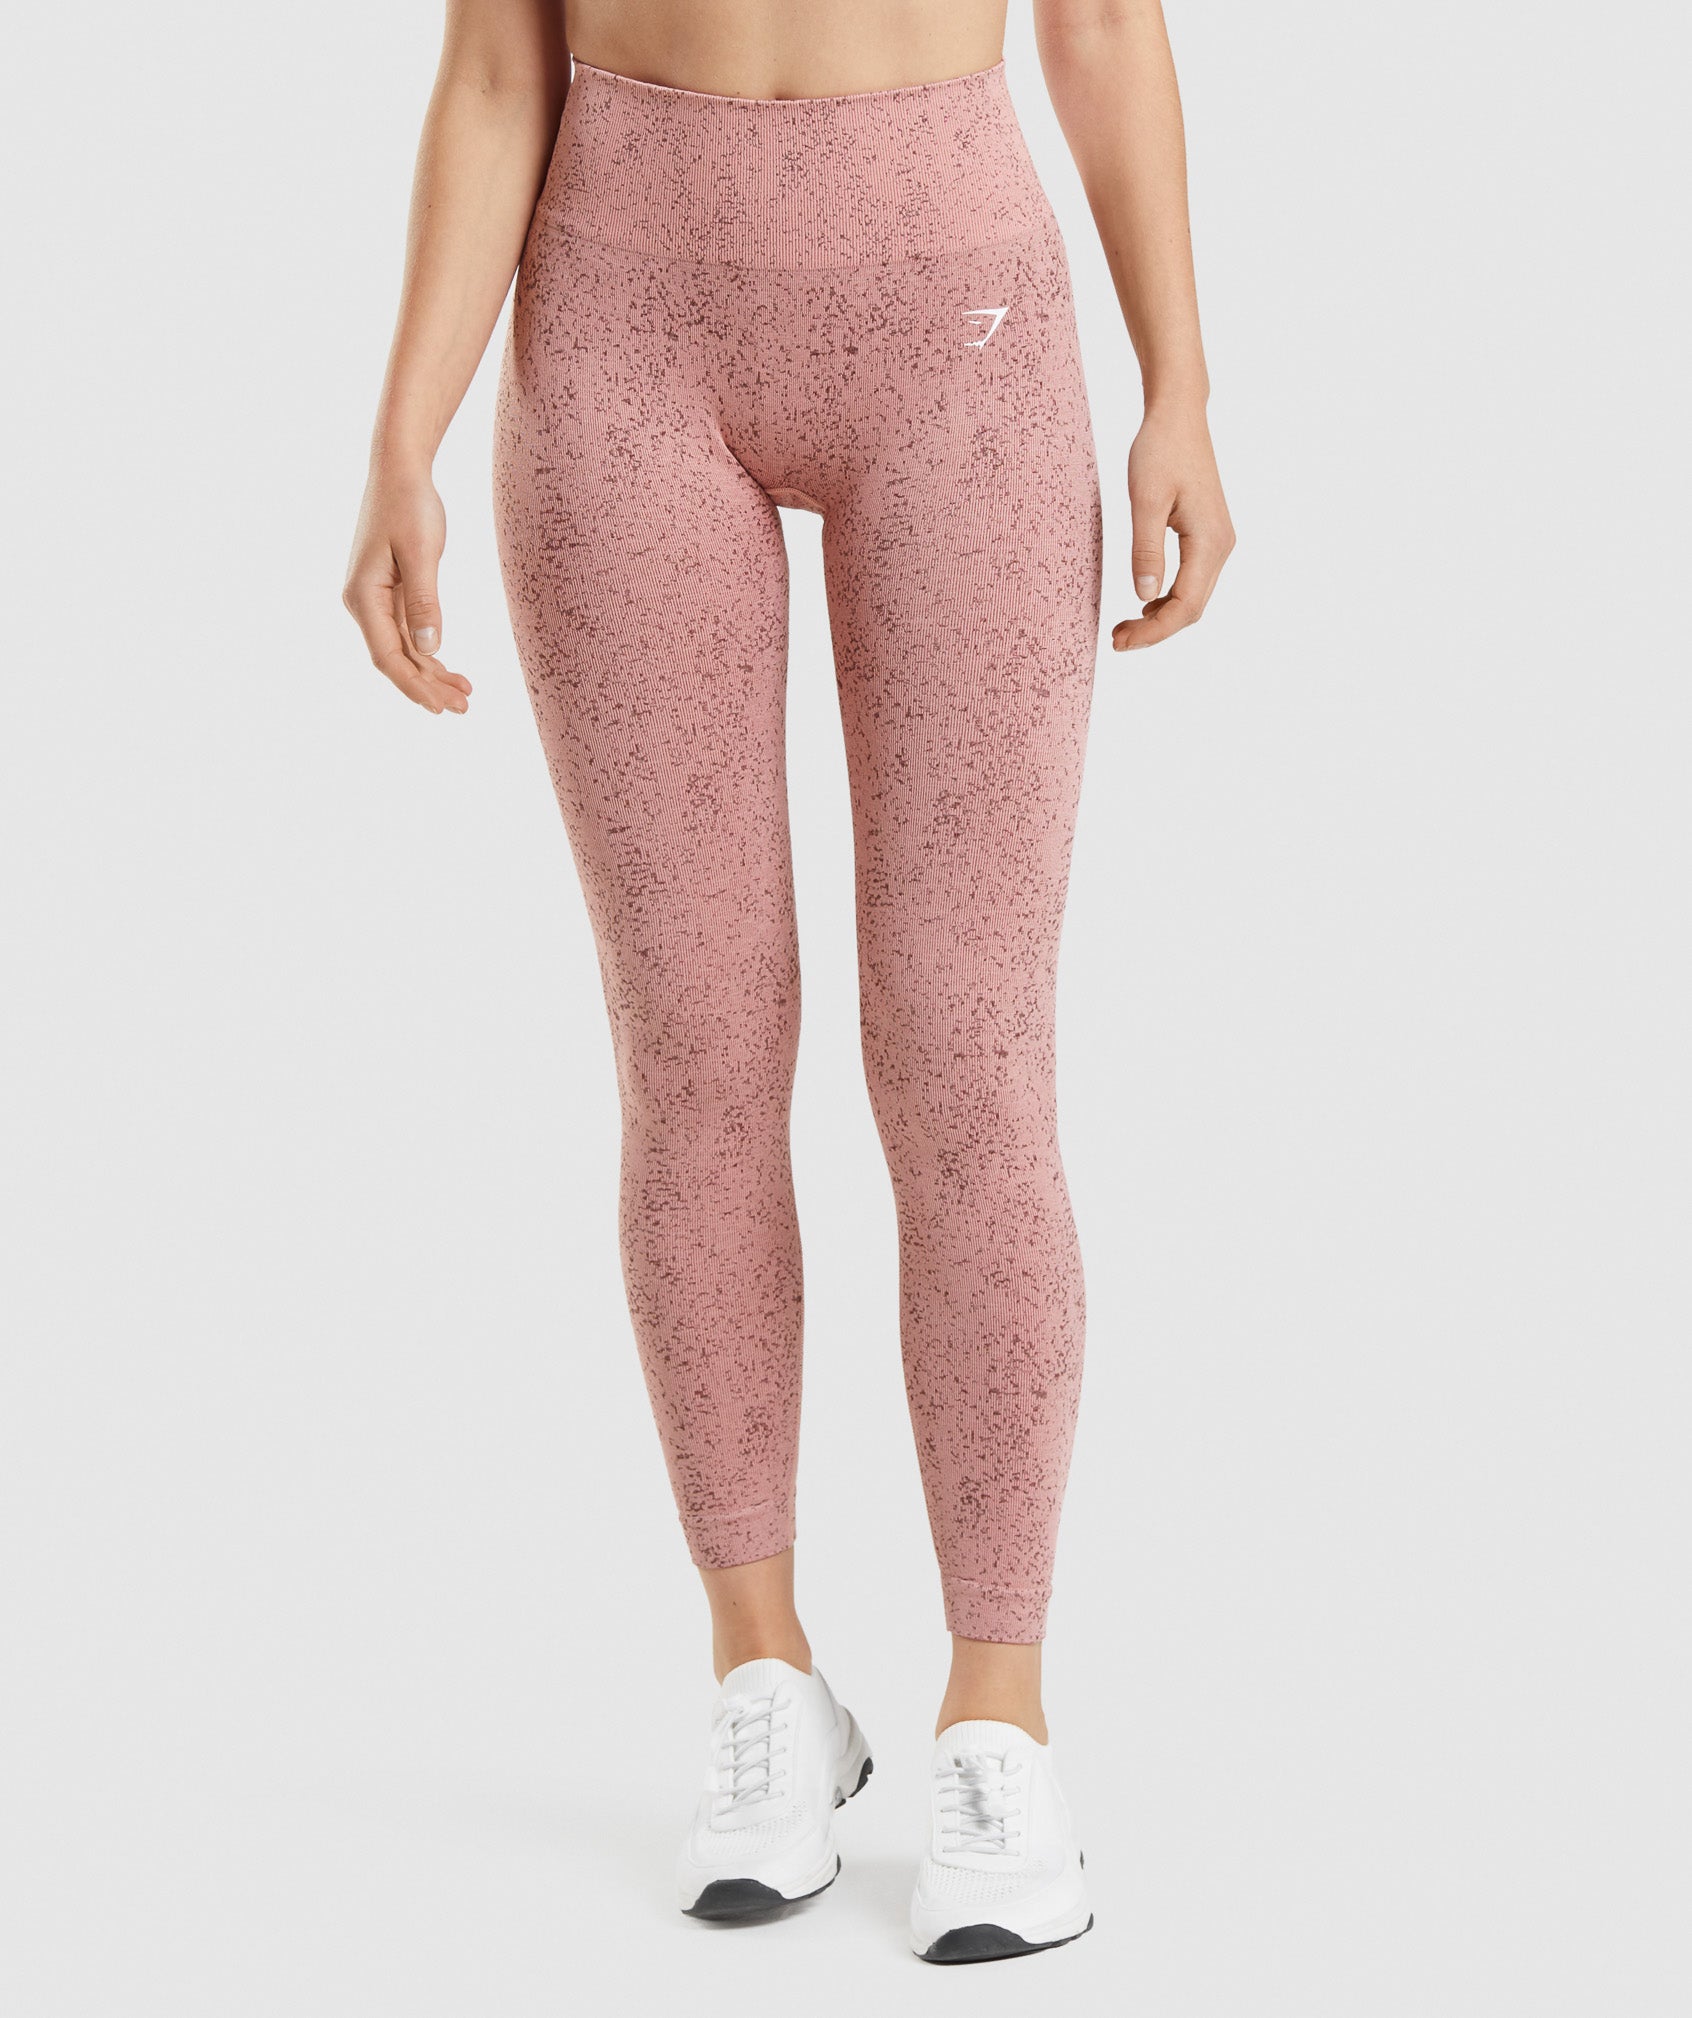 Gymshark Pink Legacy Leggings - $35 - From elle